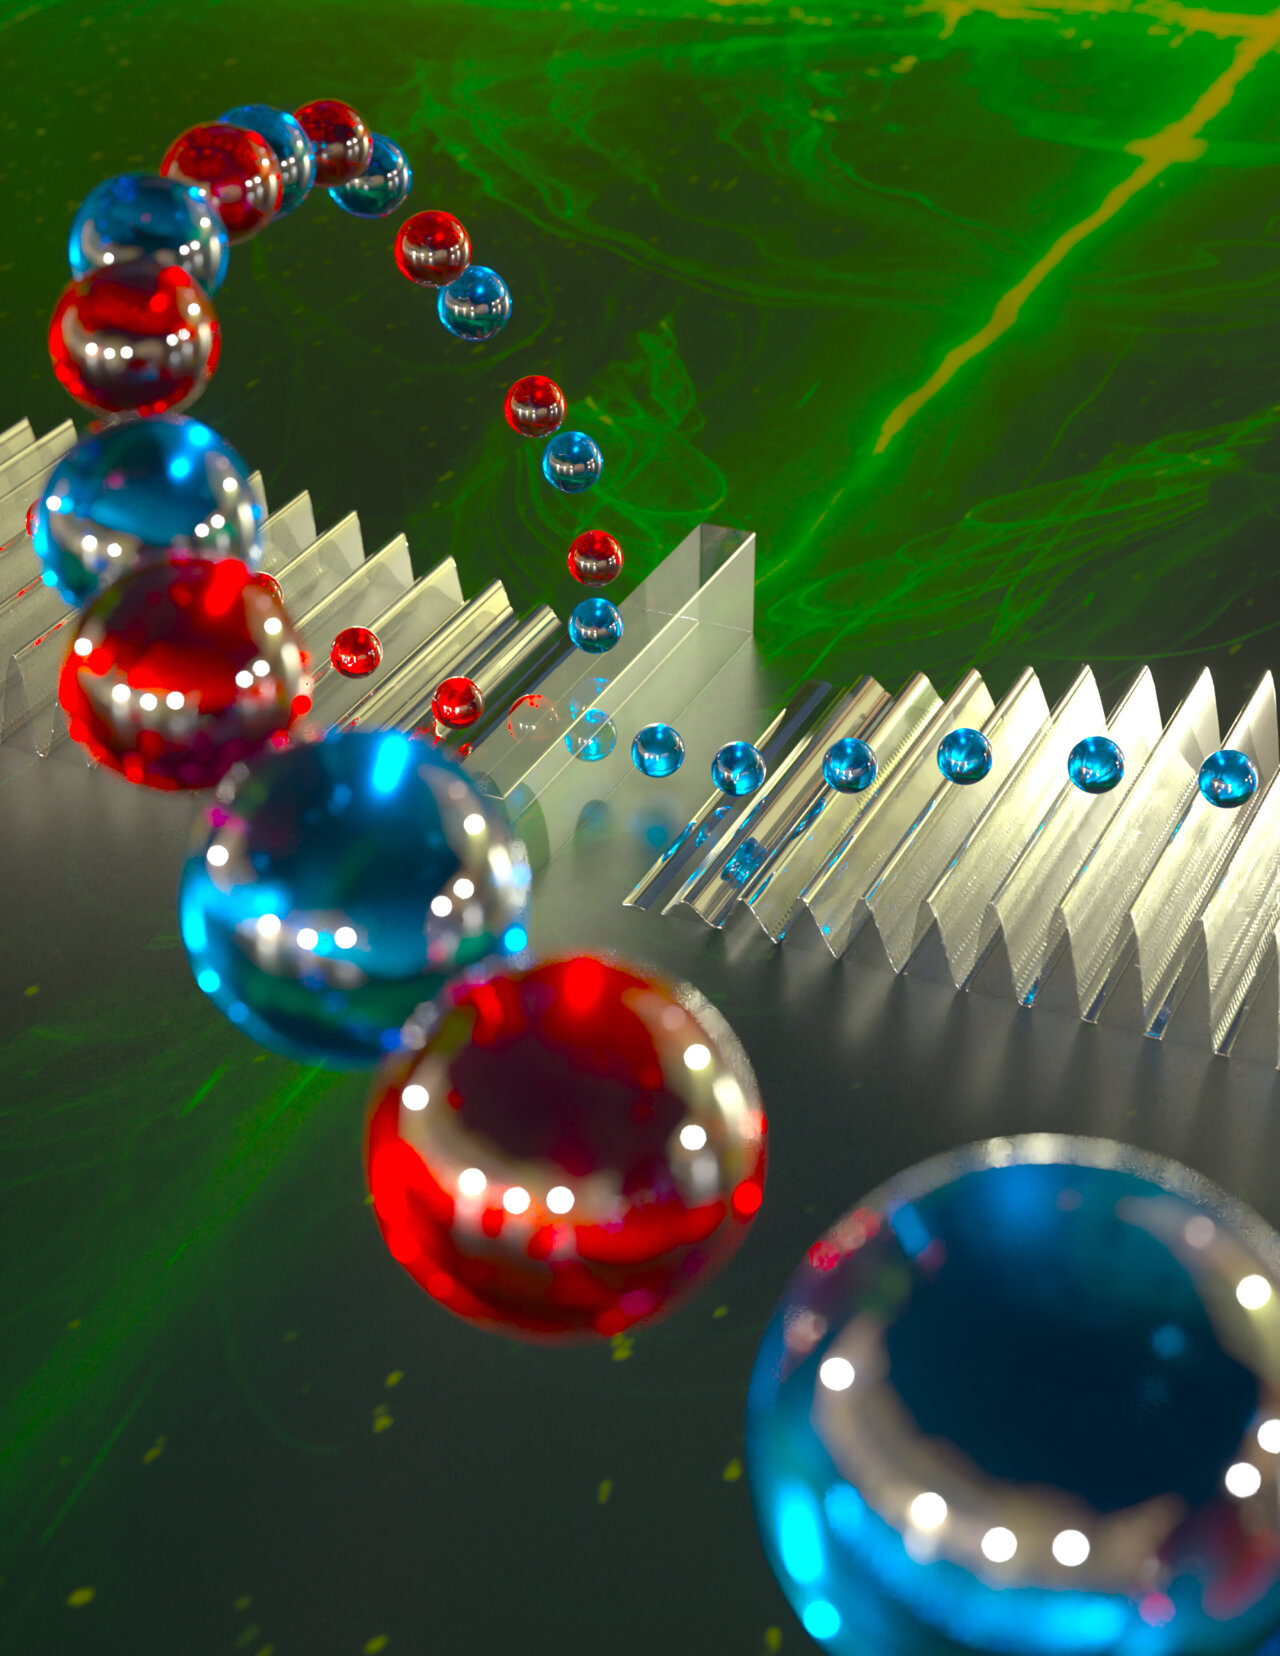 Researchers 'split' phonons in step toward new type of quantum computer